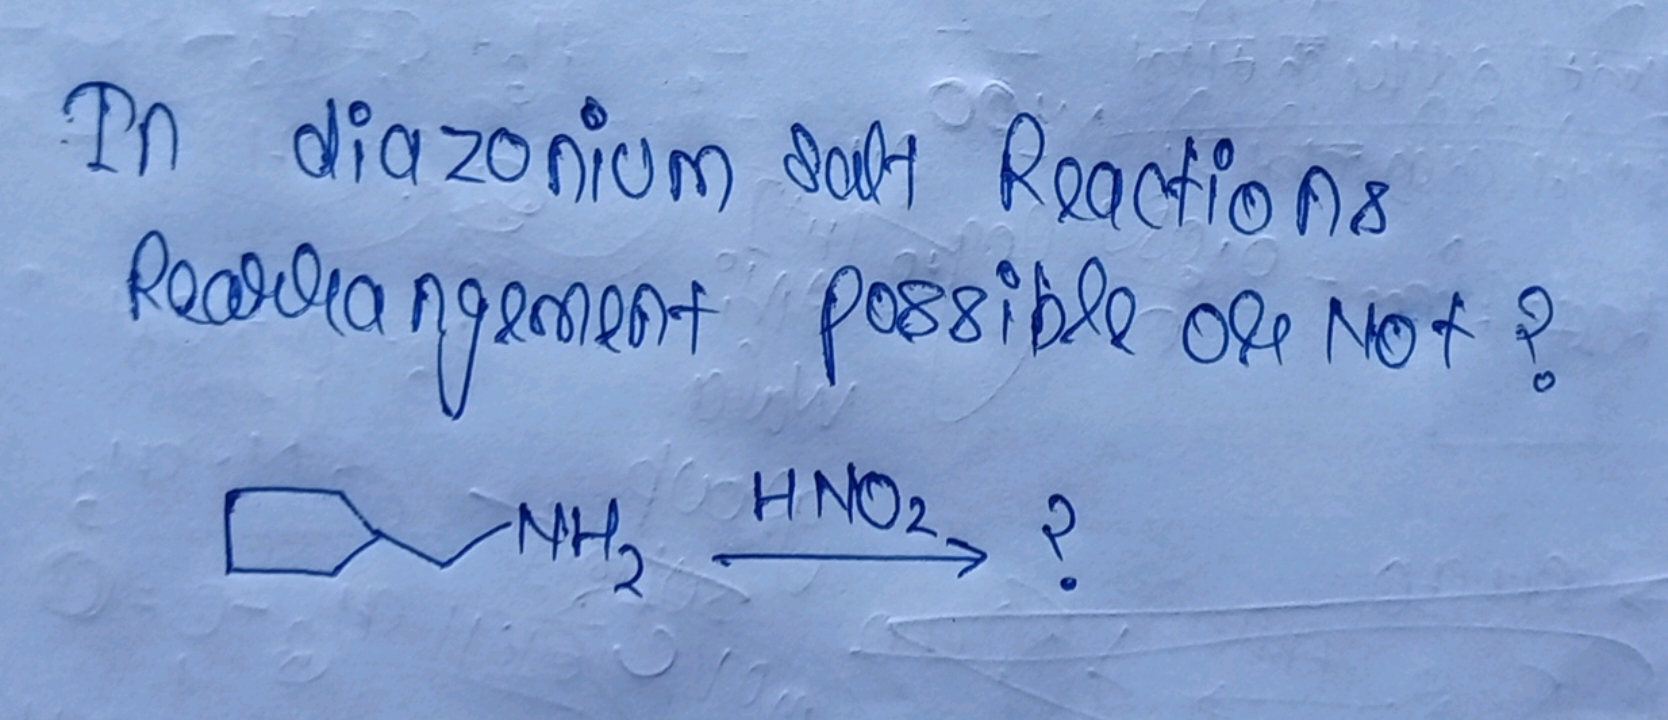 In diazonium salt Reactions Rearrangement possible ore not? □NH2​HNO2​